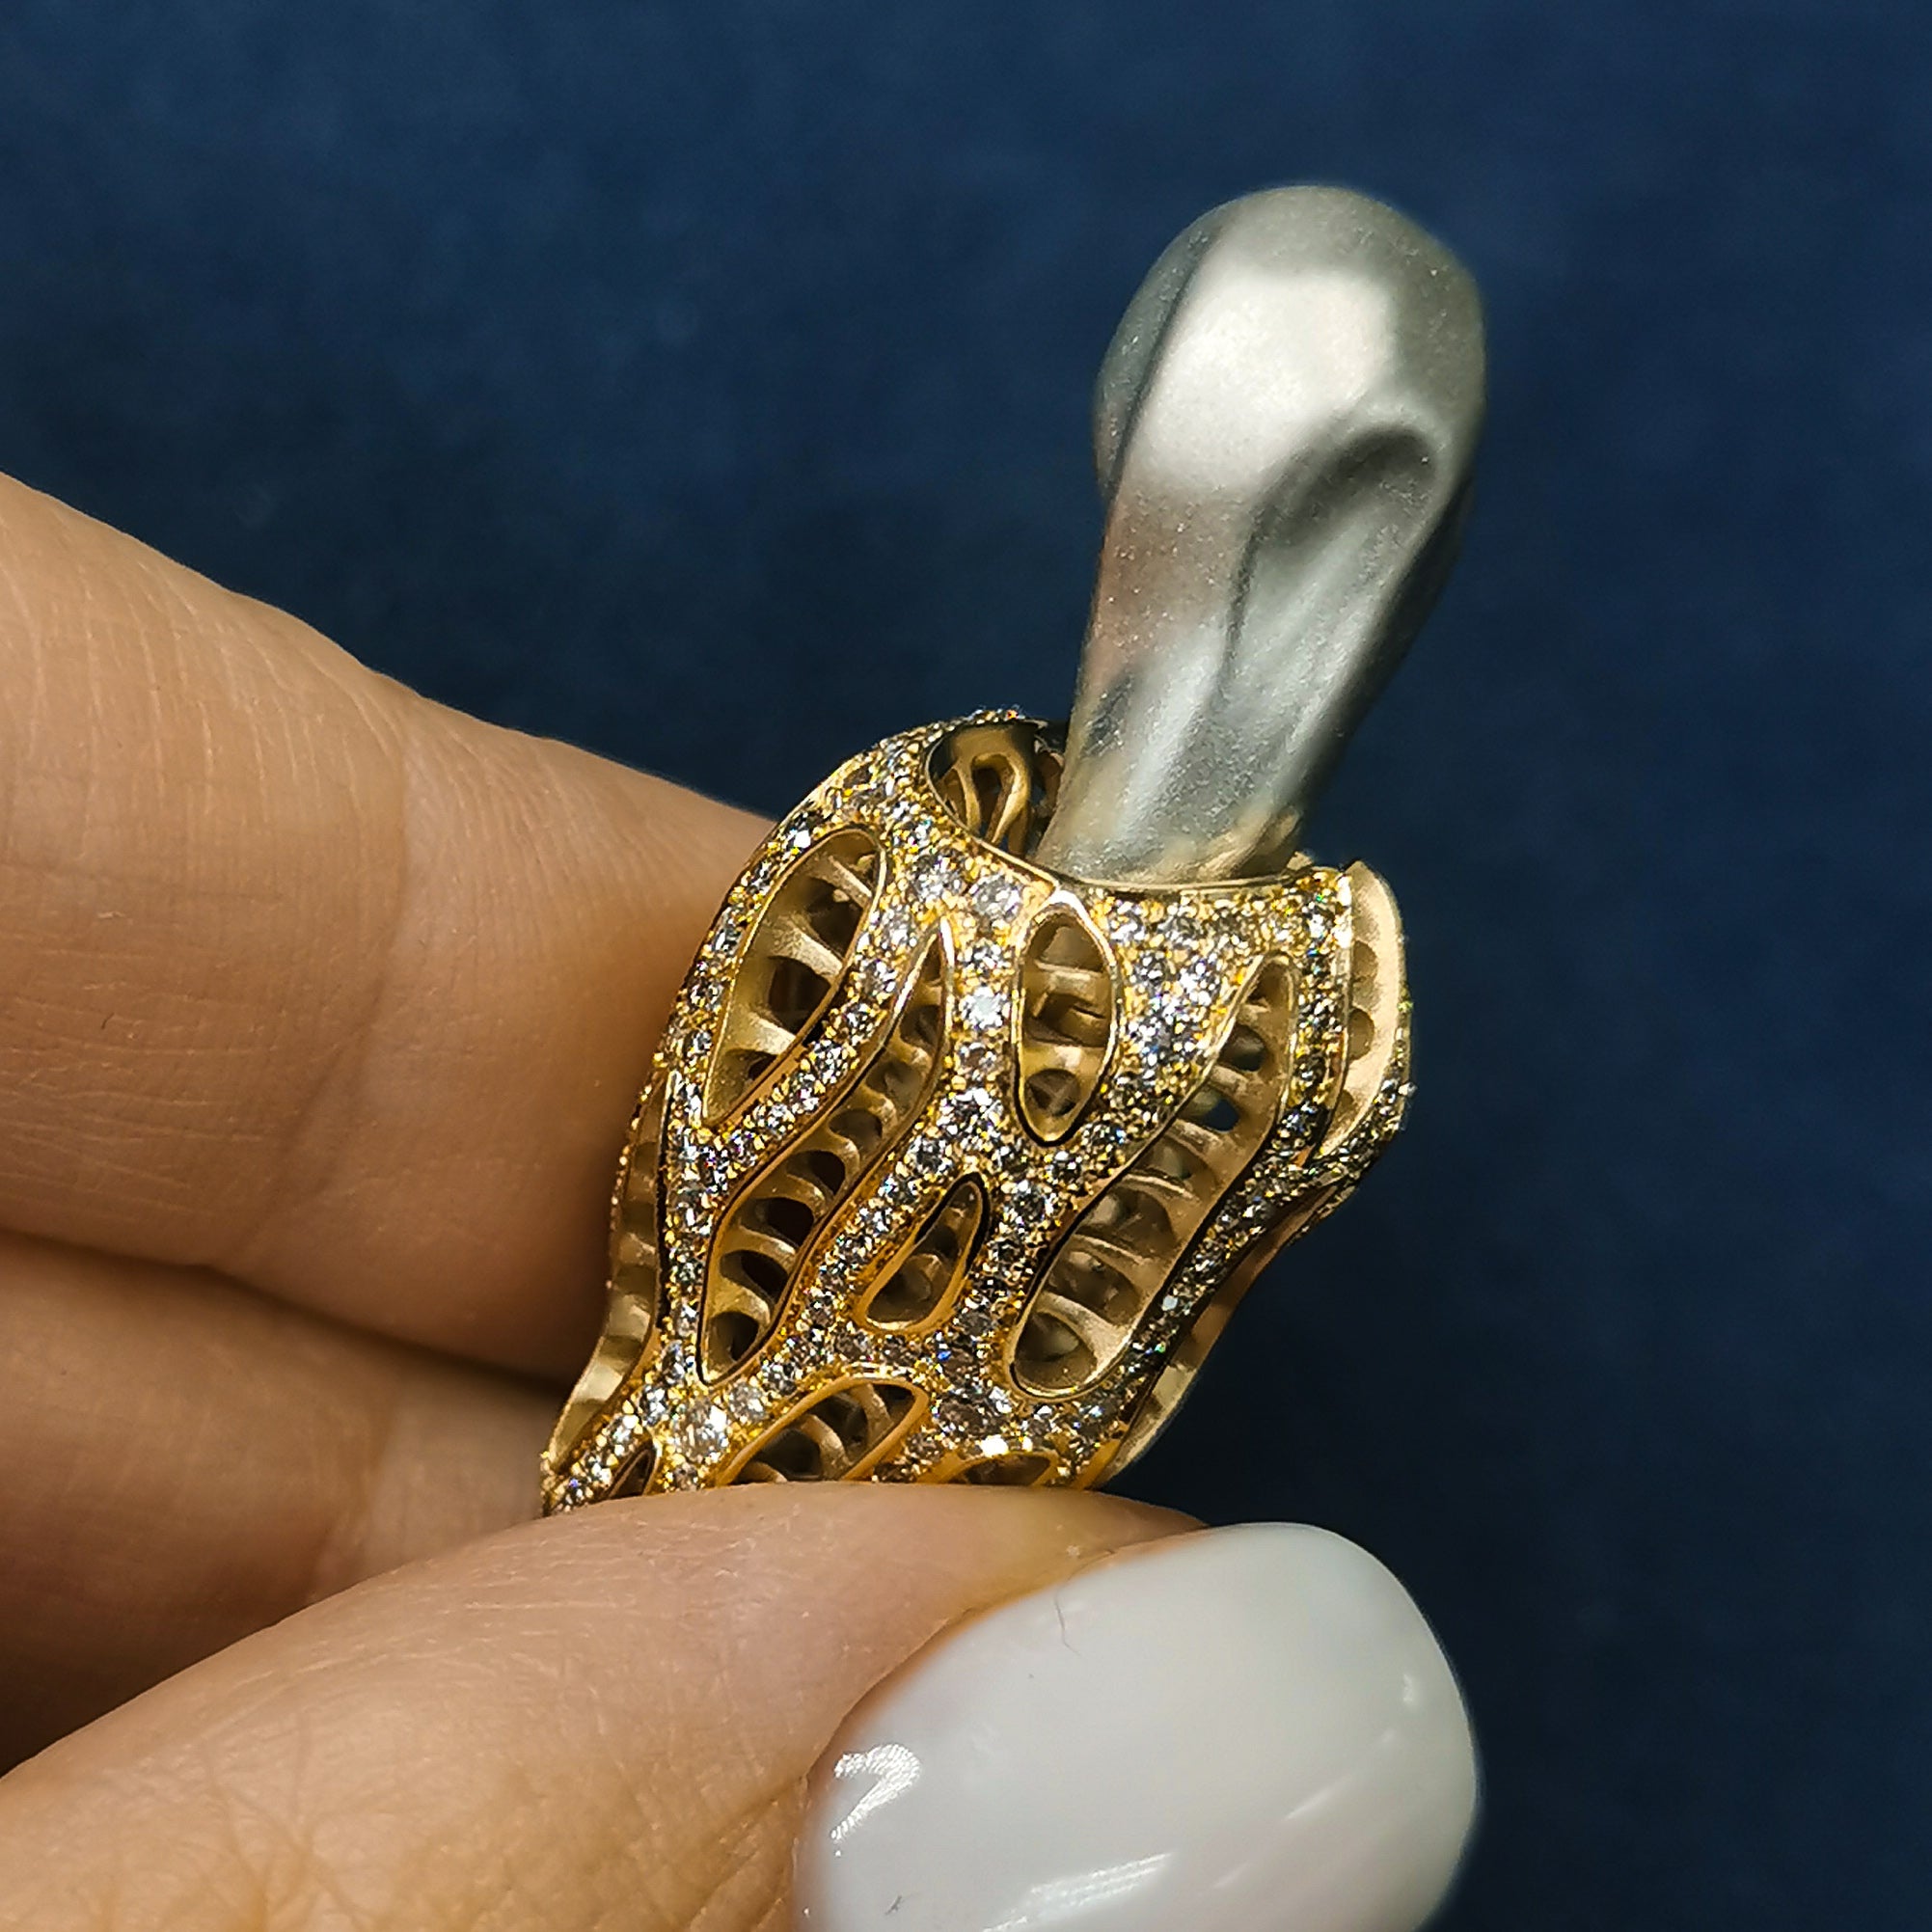 P 0204-3, 18K Yellow and White Gold, Champagne Diamonds Pendant